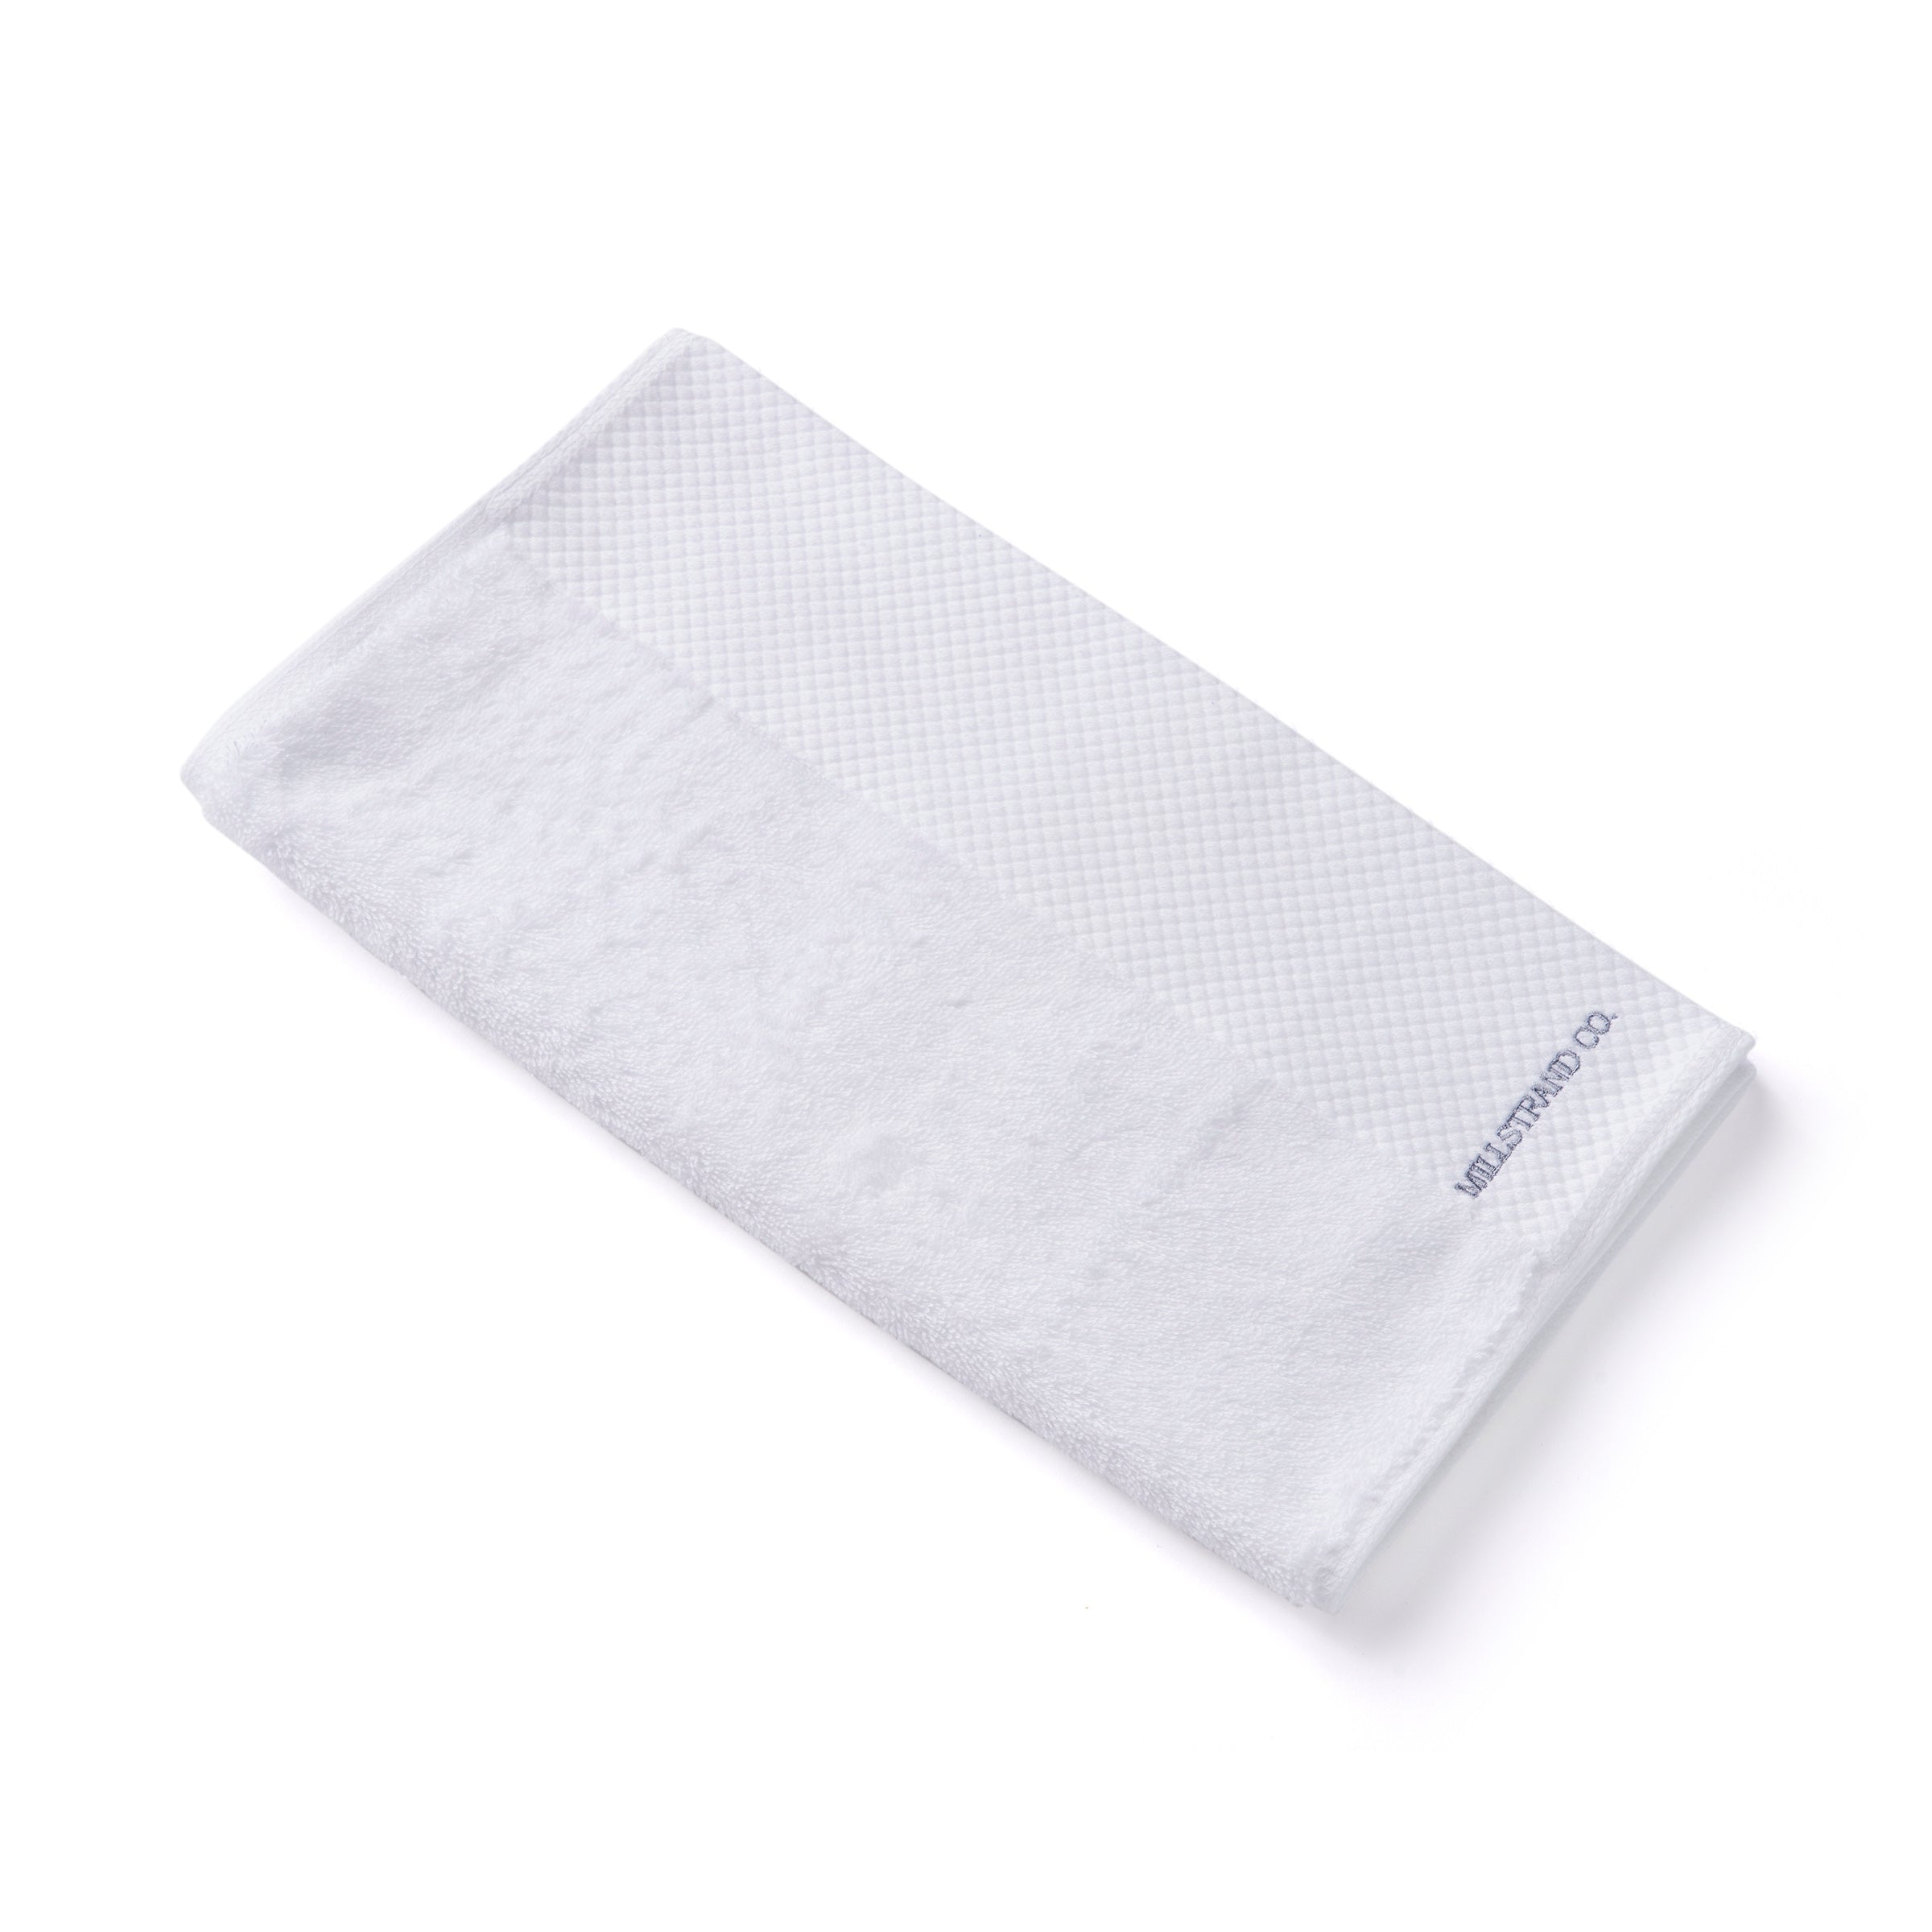 Millstrand Co. Lana Hand Towel Set in White Ivory